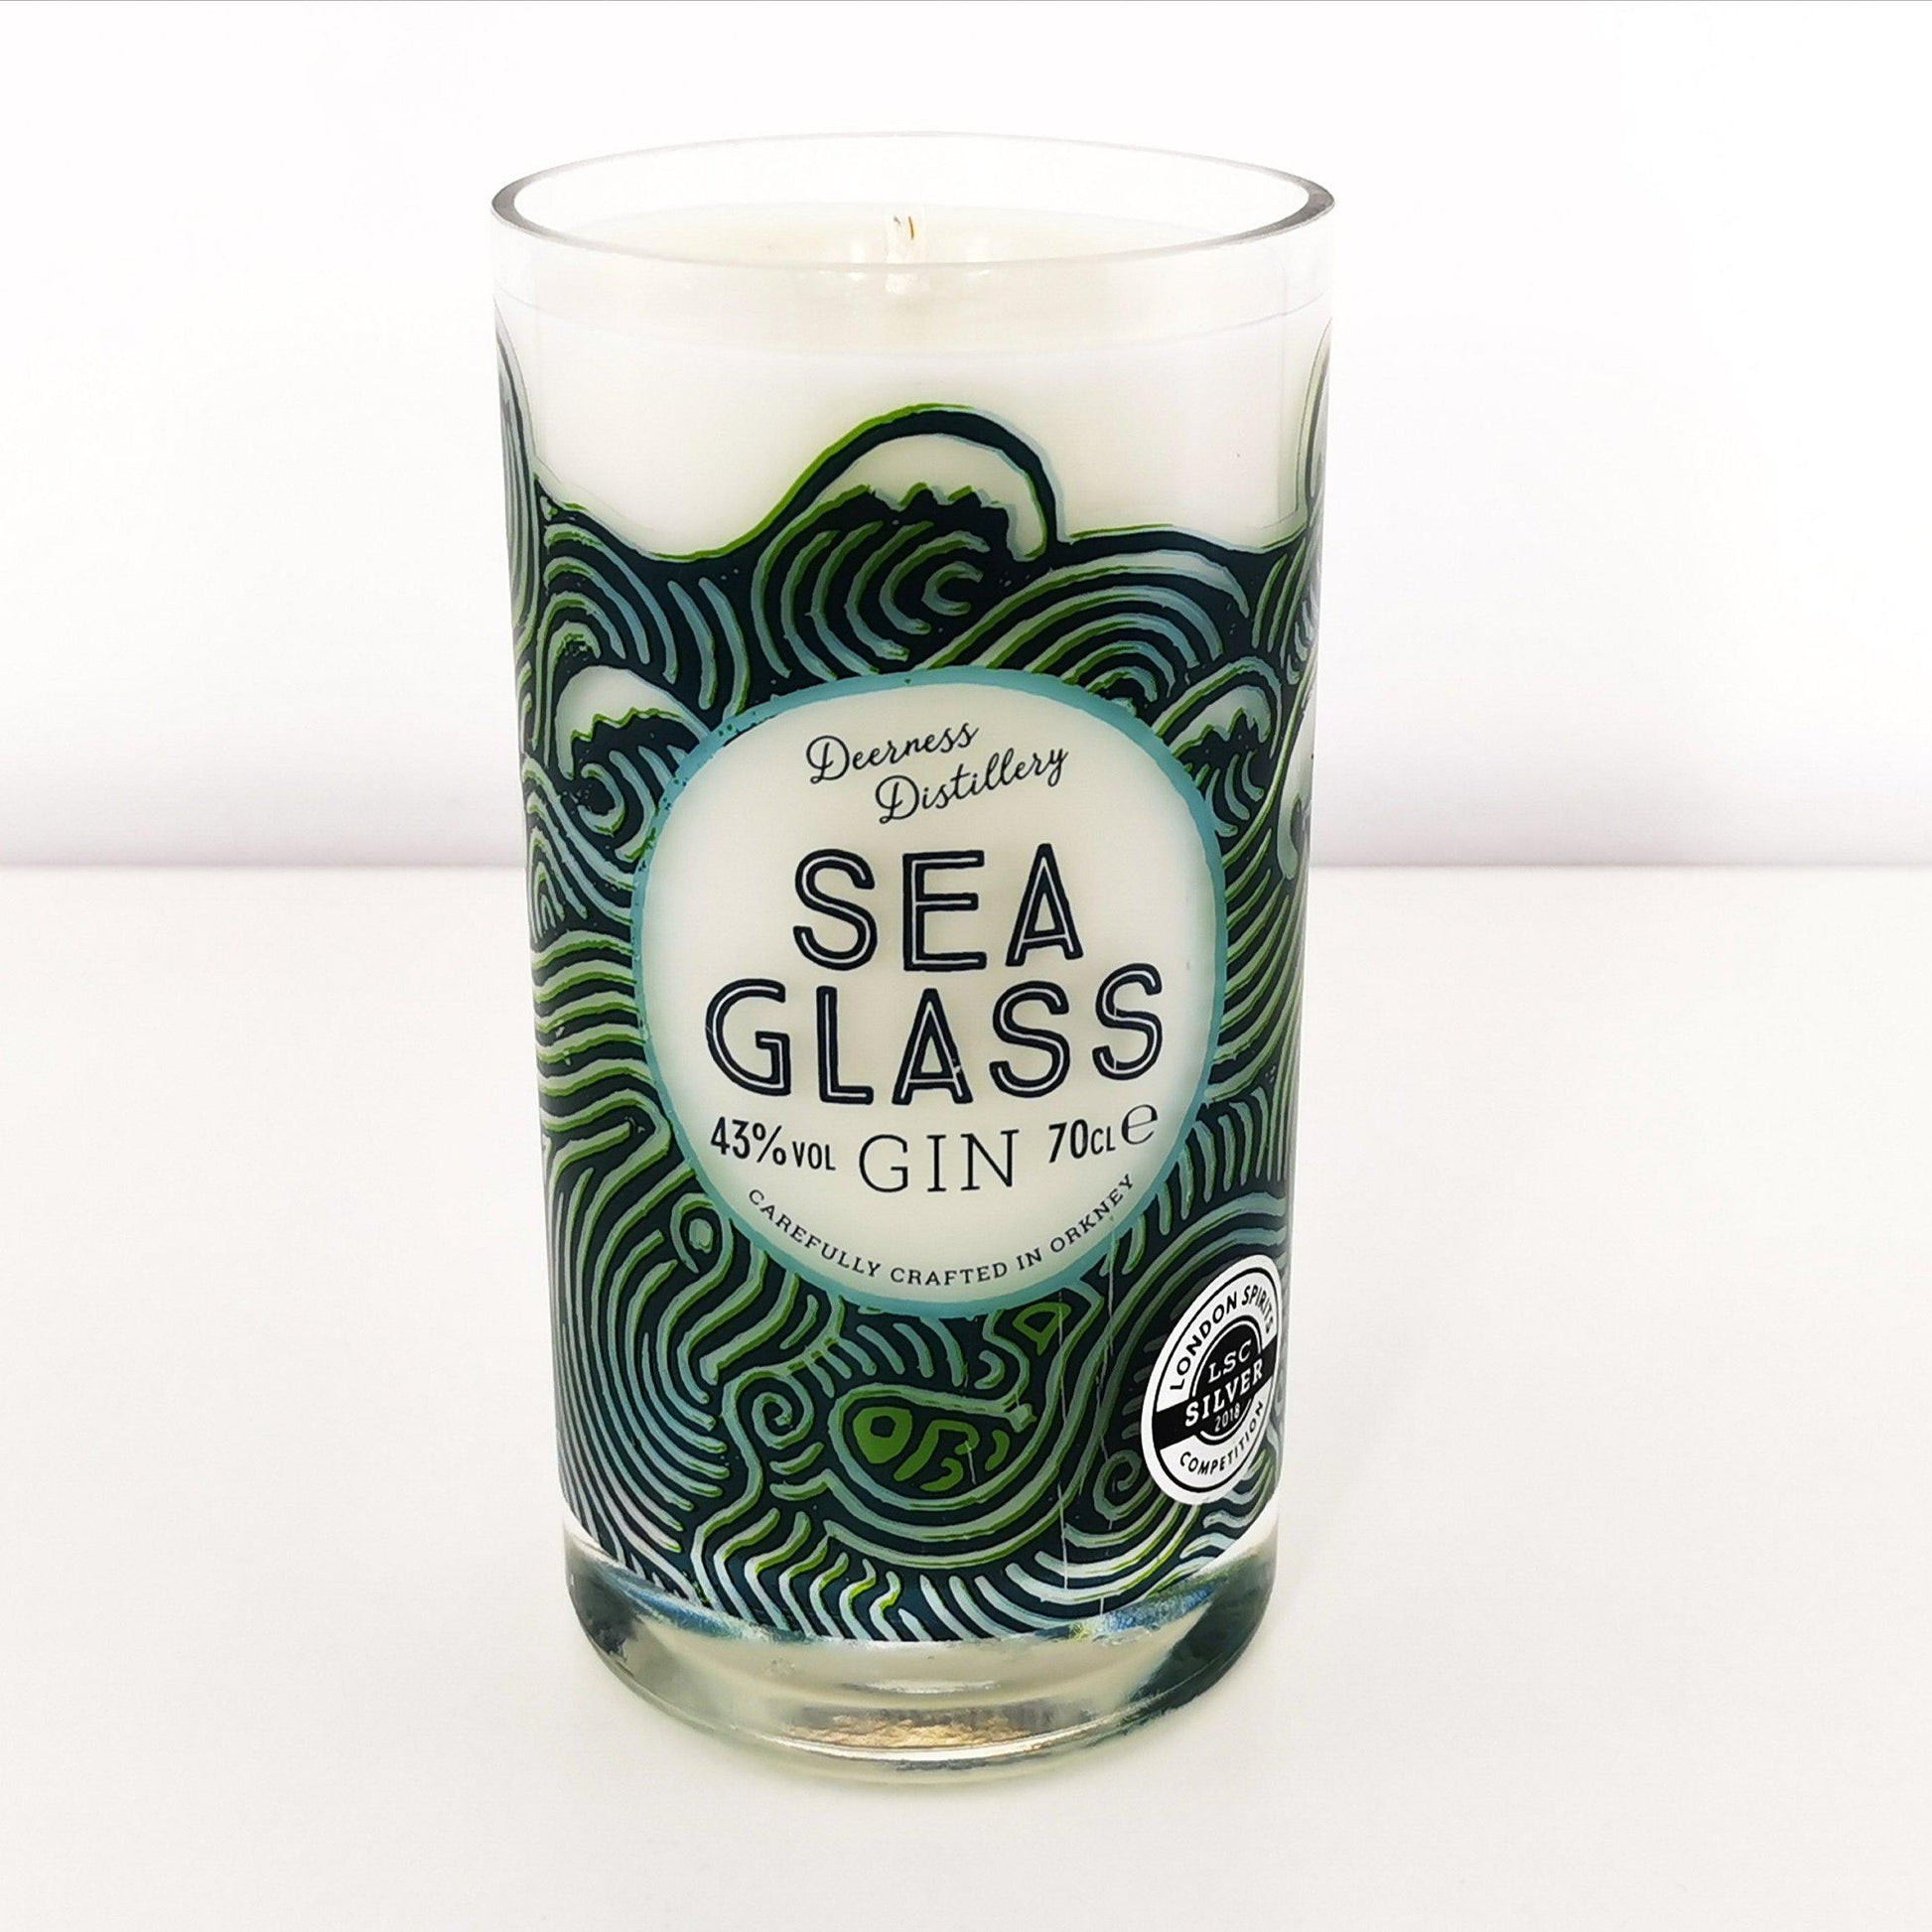 Sea Glass Gin Bottle Candle-Gin Bottle Candles-Adhock Homeware